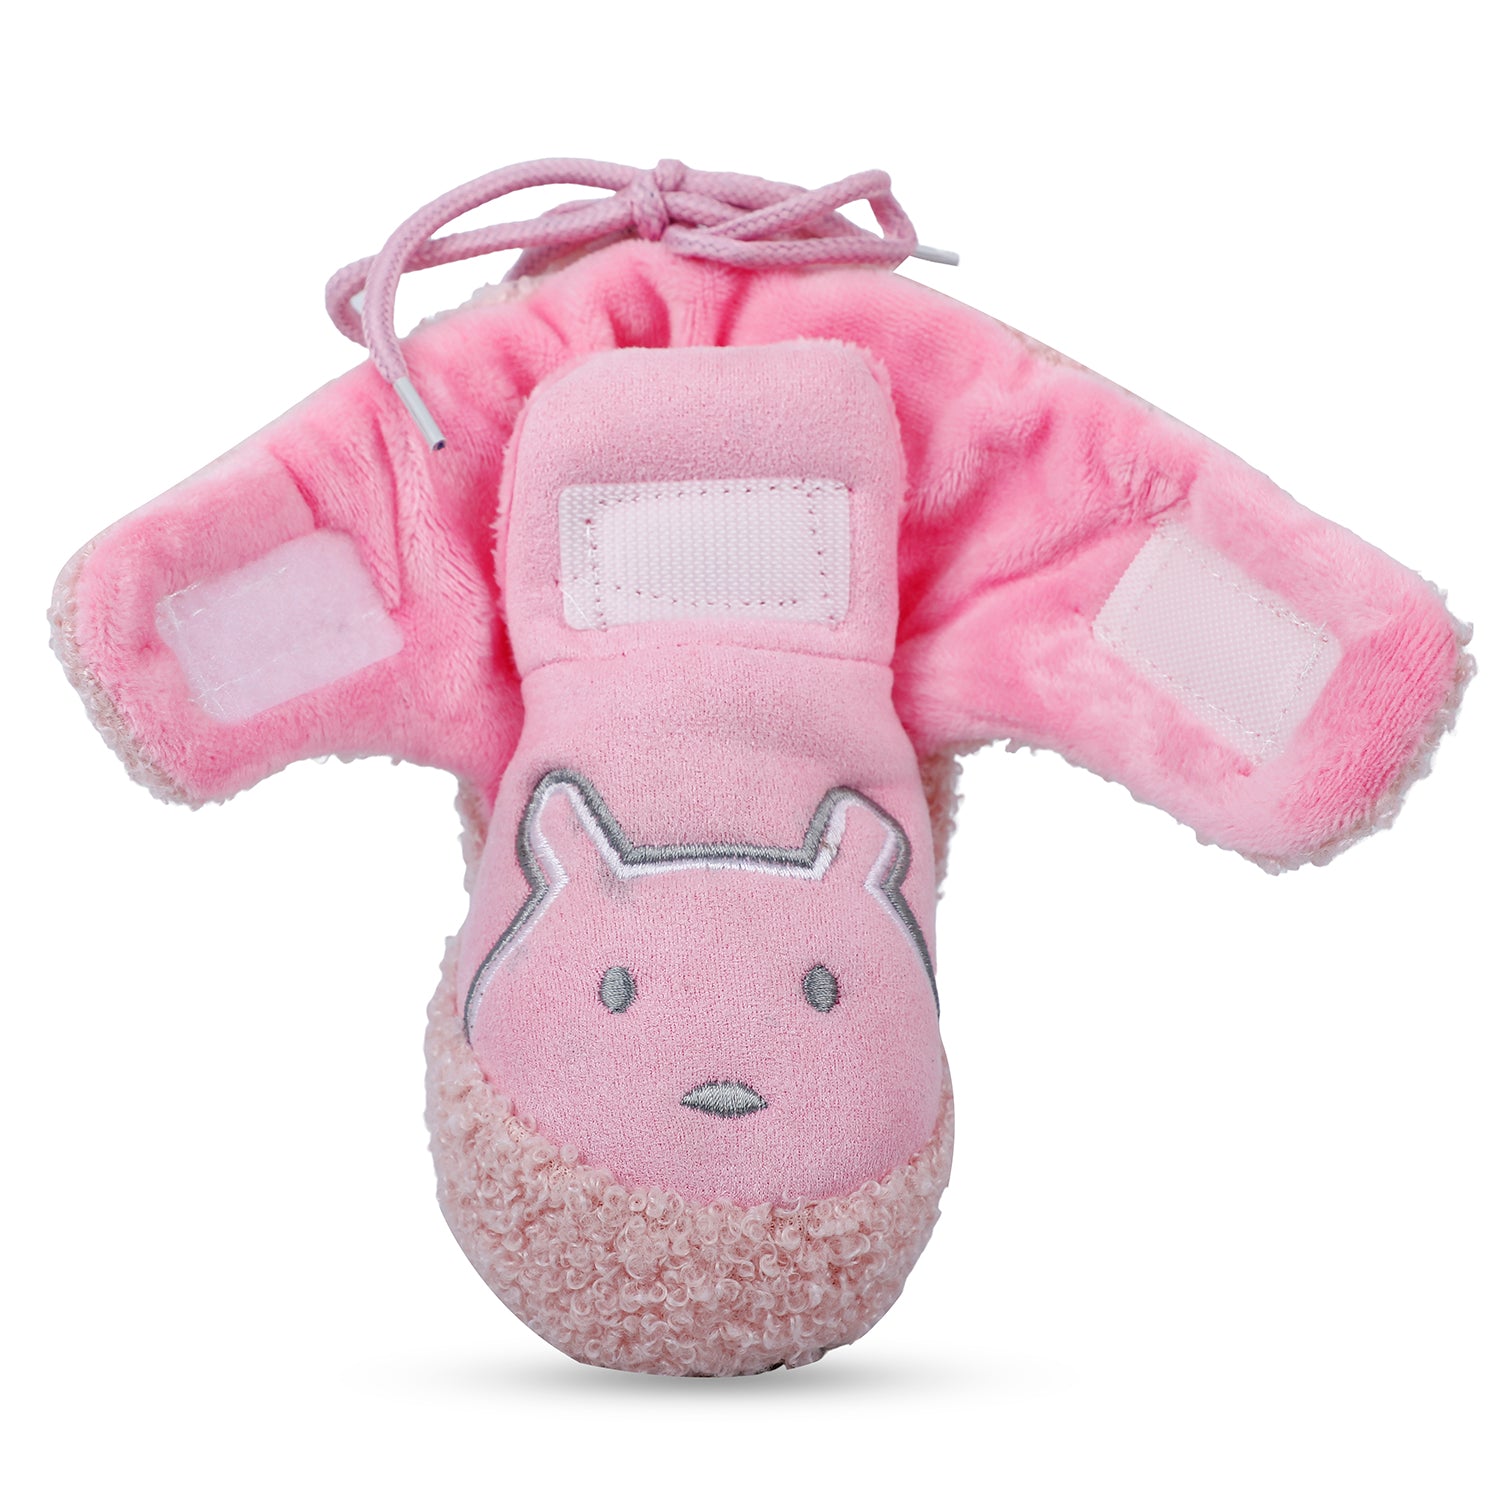 Baby Moo Bear Soft Fleece Lined Velcro Anti Skid Booties - Pink